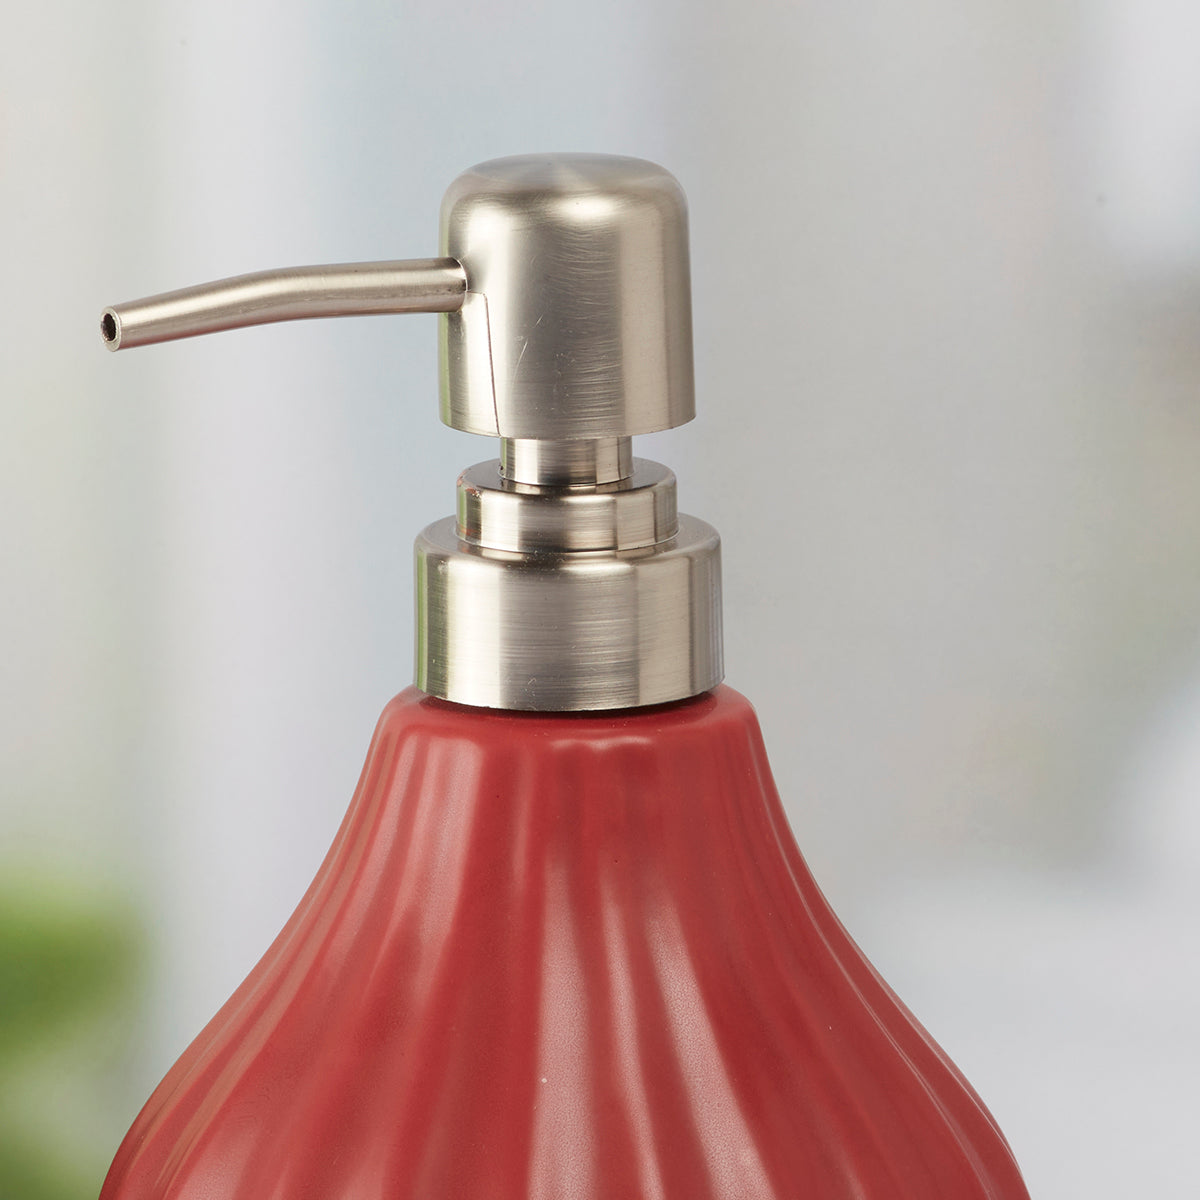 Ceramic Soap Dispenser Pump for Bathroom for Bath Gel, Lotion, Shampoo (8646)